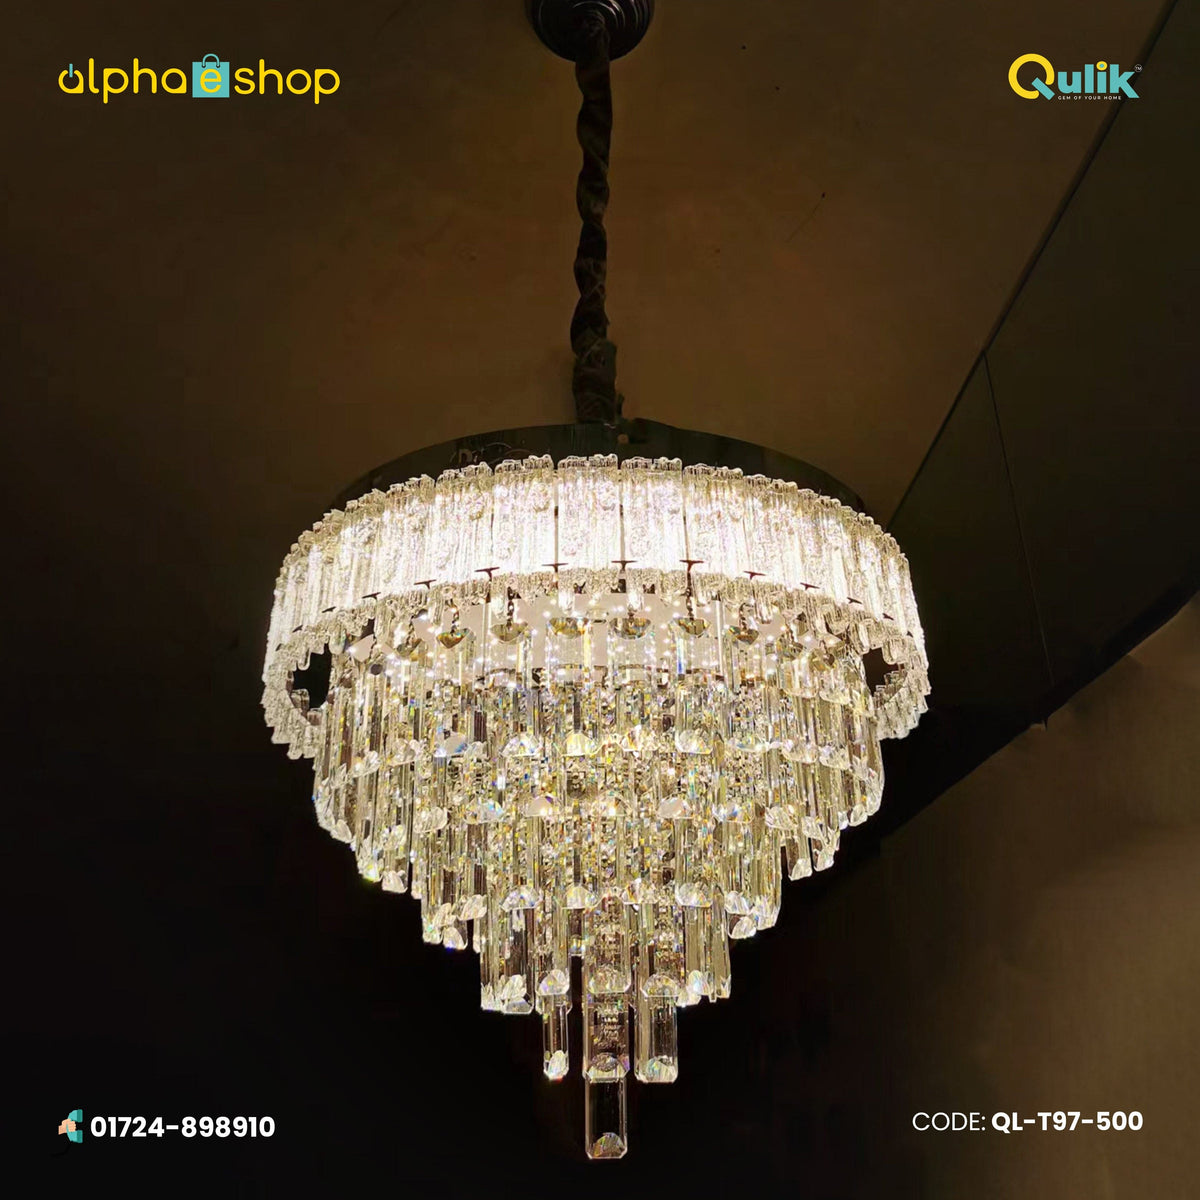 Qulik T97-500 LED Ceiling Light - Modern Crystal Chandelier